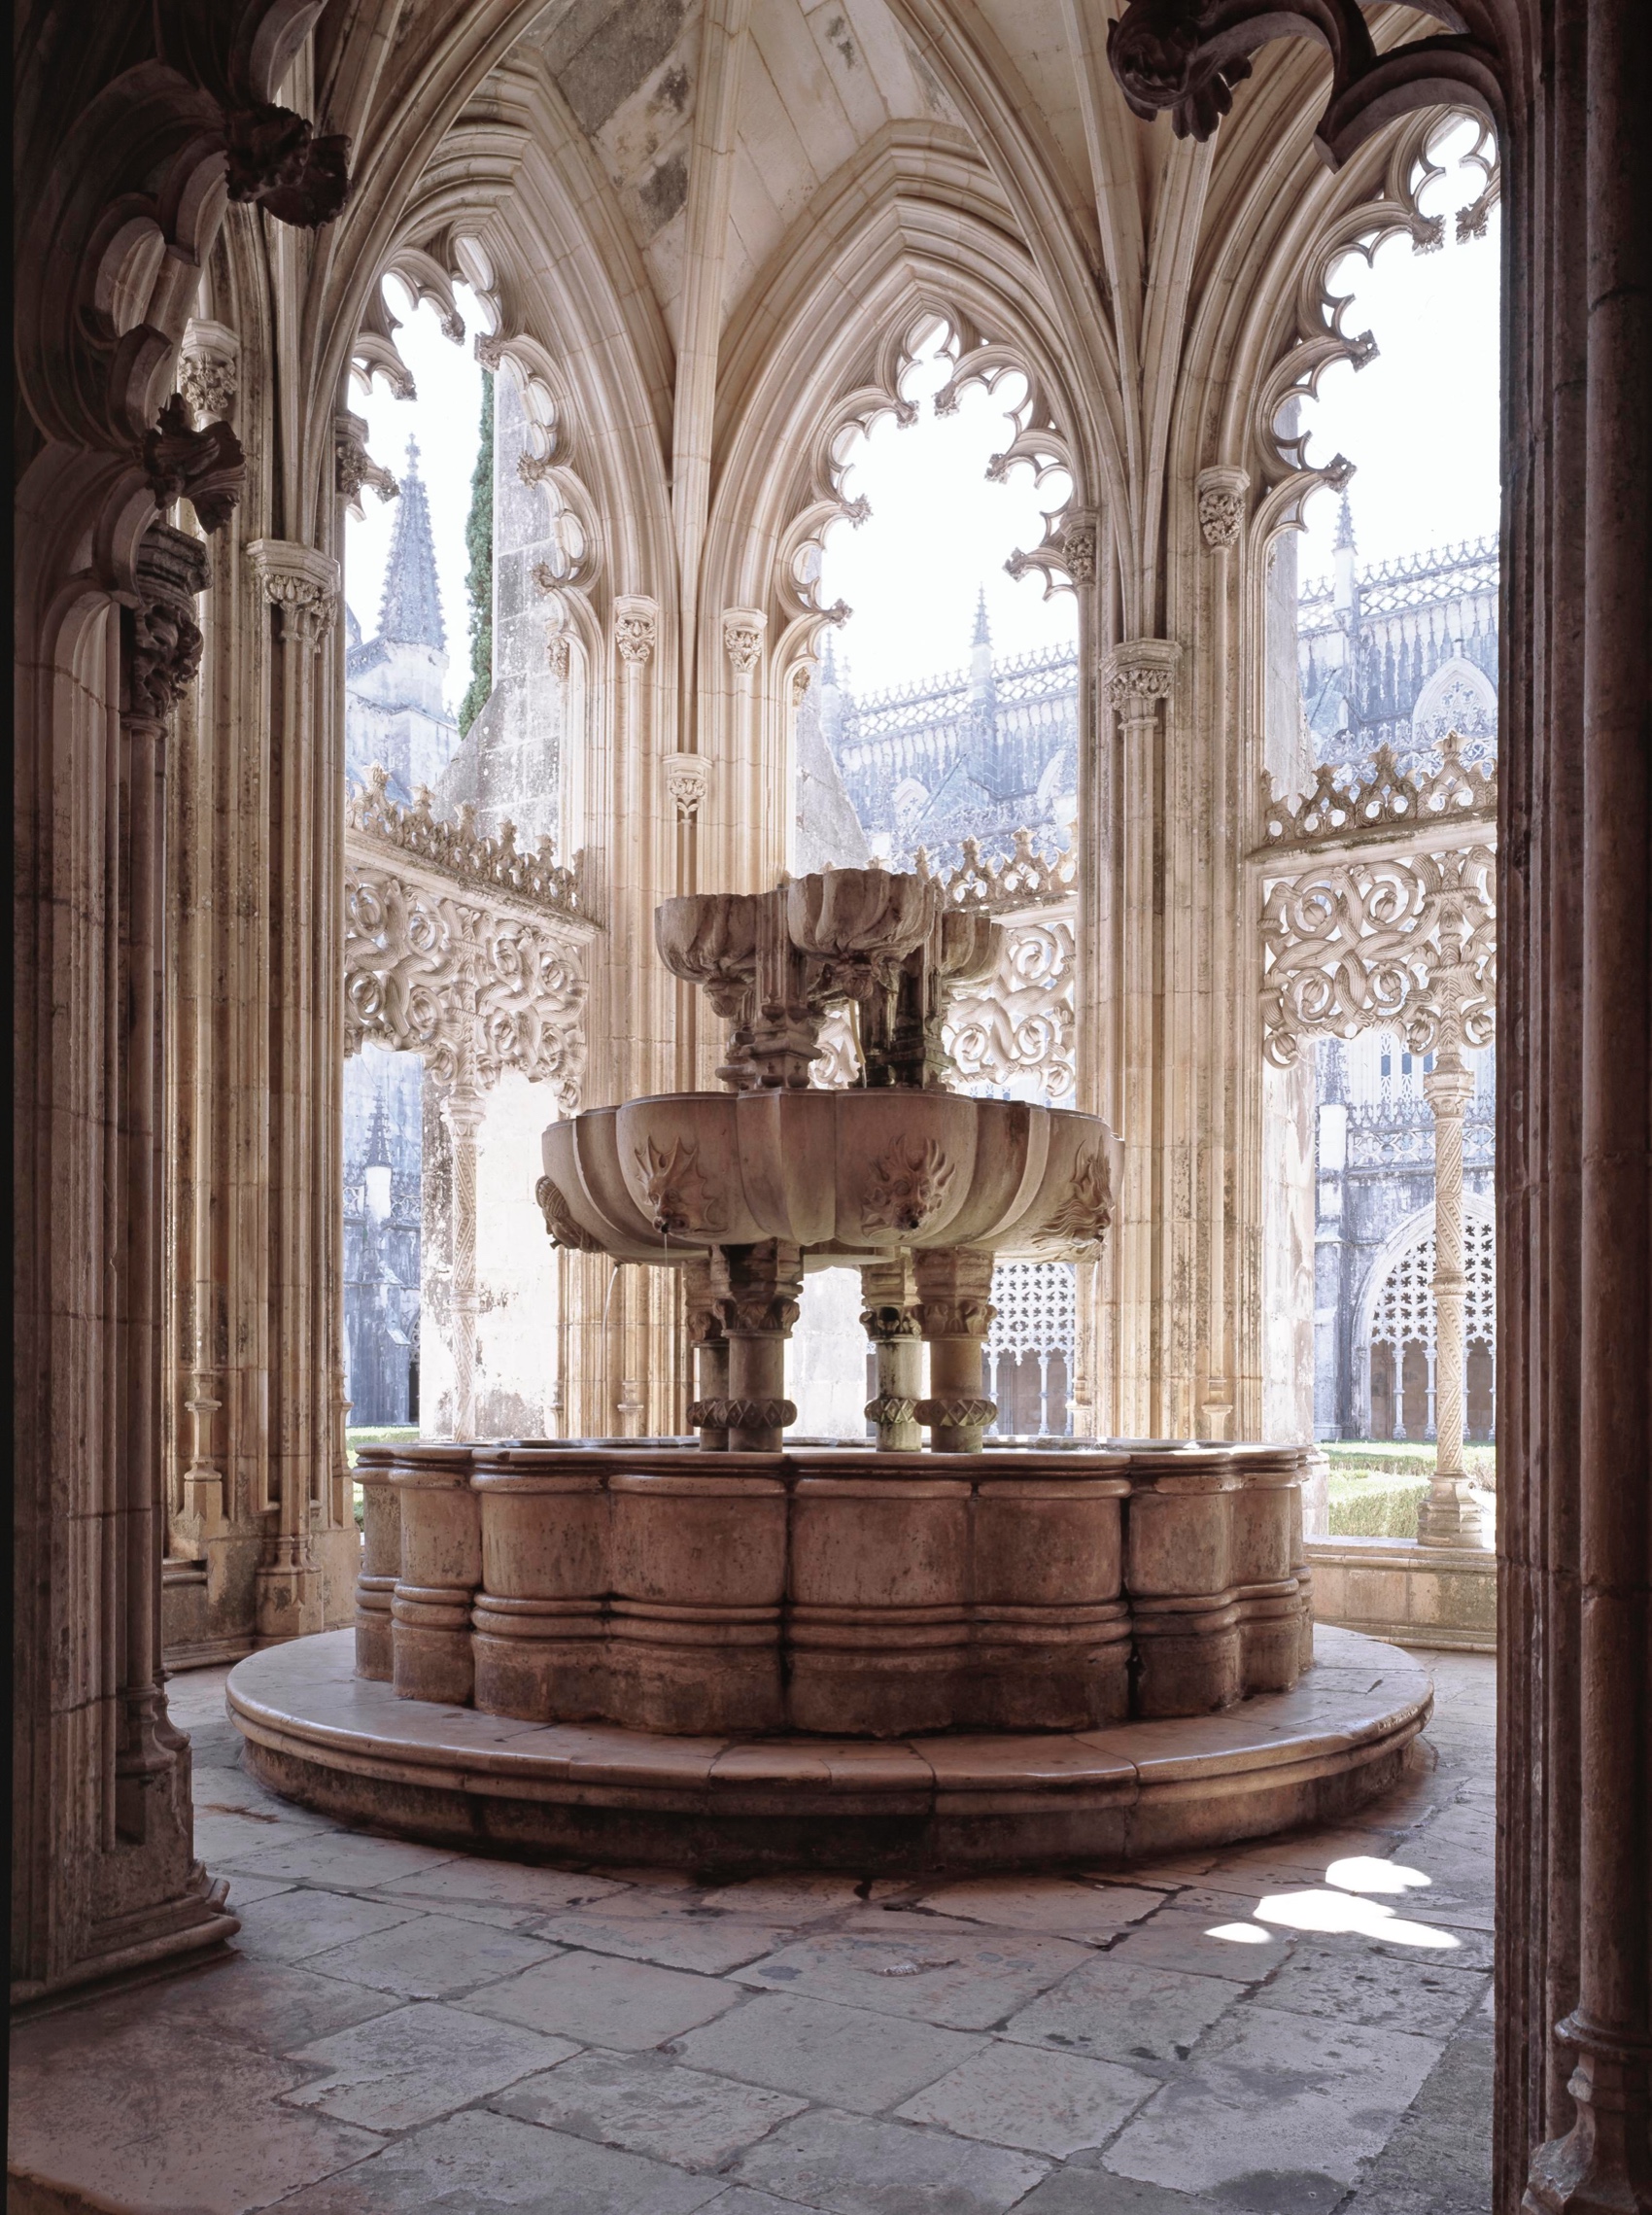 Turismo Centro de Portugal - Alcobaca Batalha Monasteries with Obidos fountain